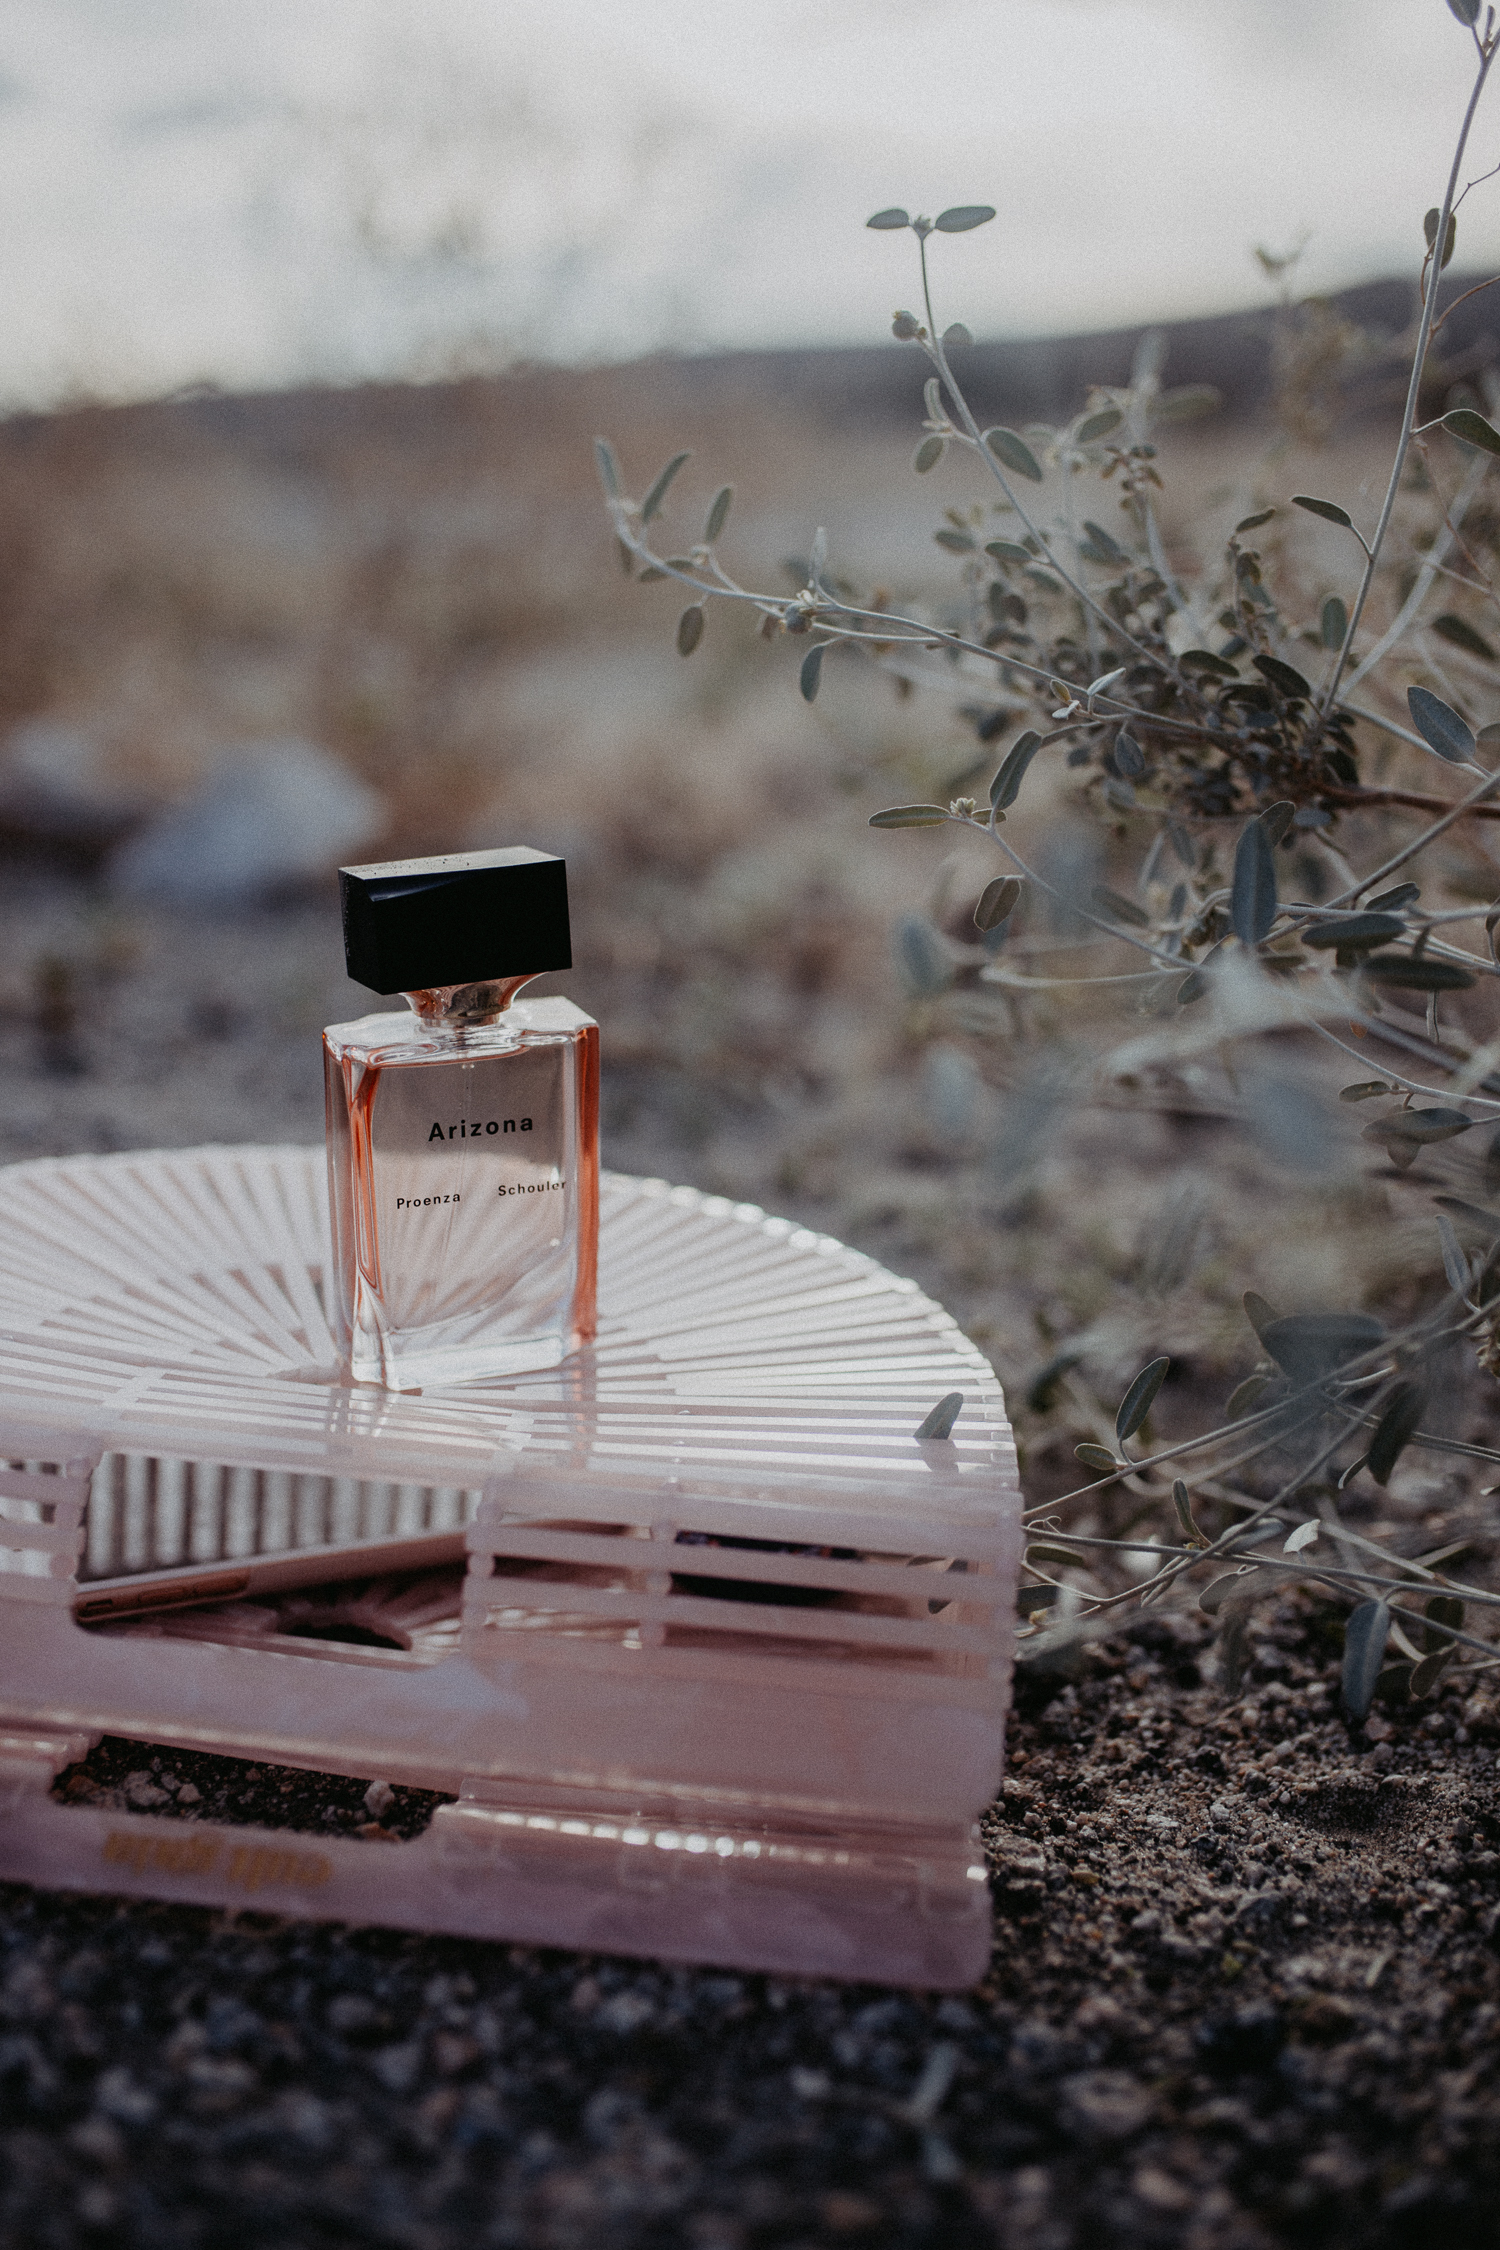 Proenza Schouler Arizona Perfume | Bikinis & Passports